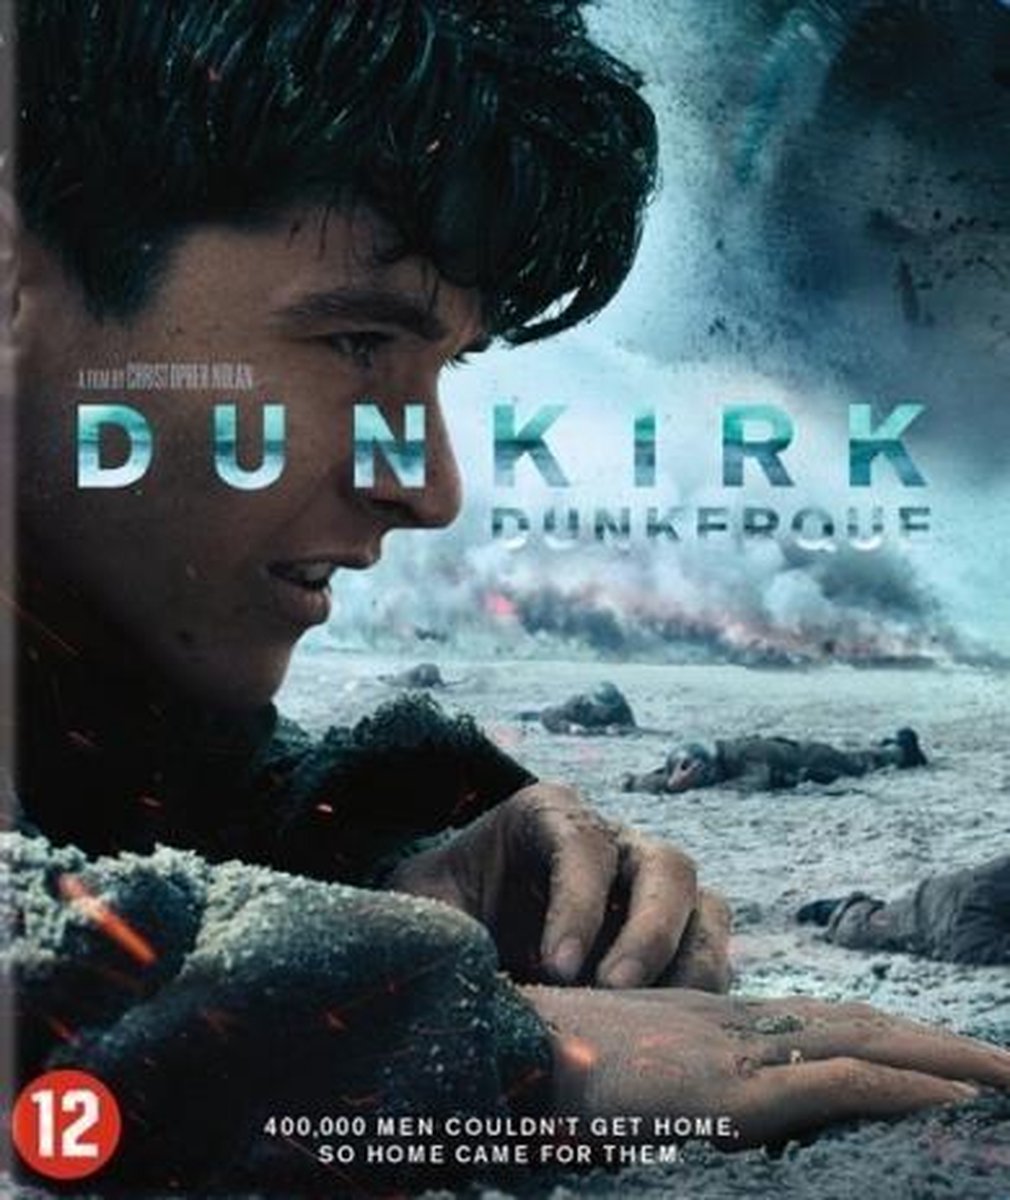 Dunkirk (Blu-ray) - Warner Home Video